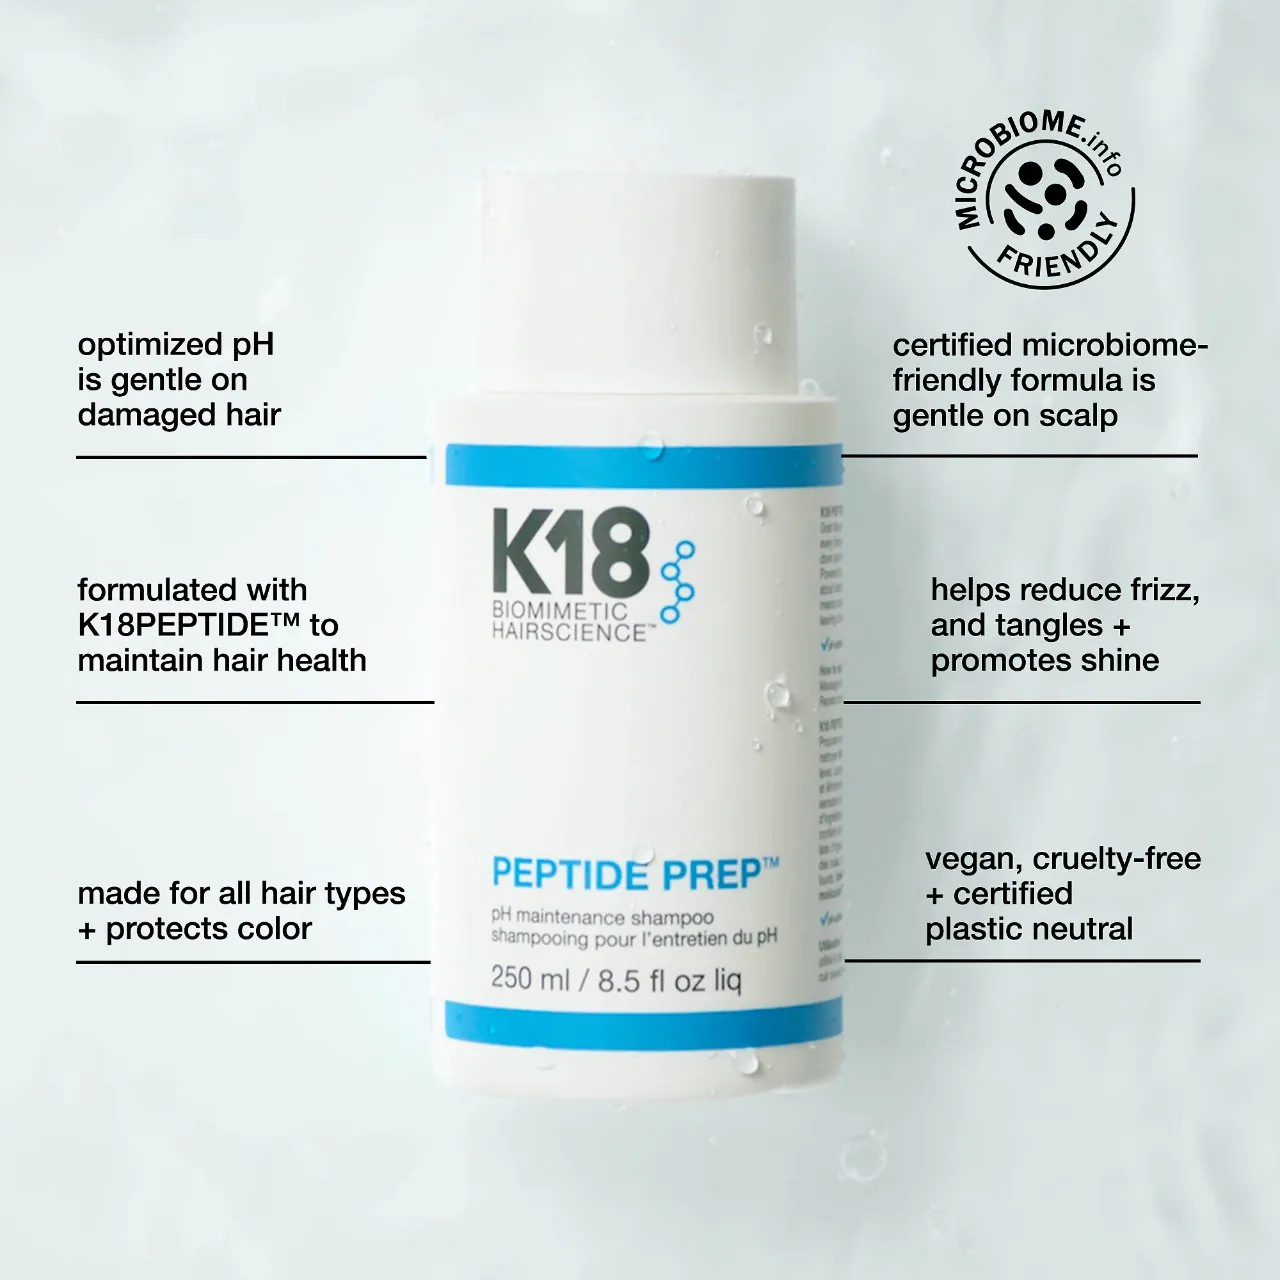 PEPTIDE PREP Clarifying Detox Shampoo K18 Biomimetic Hairscience